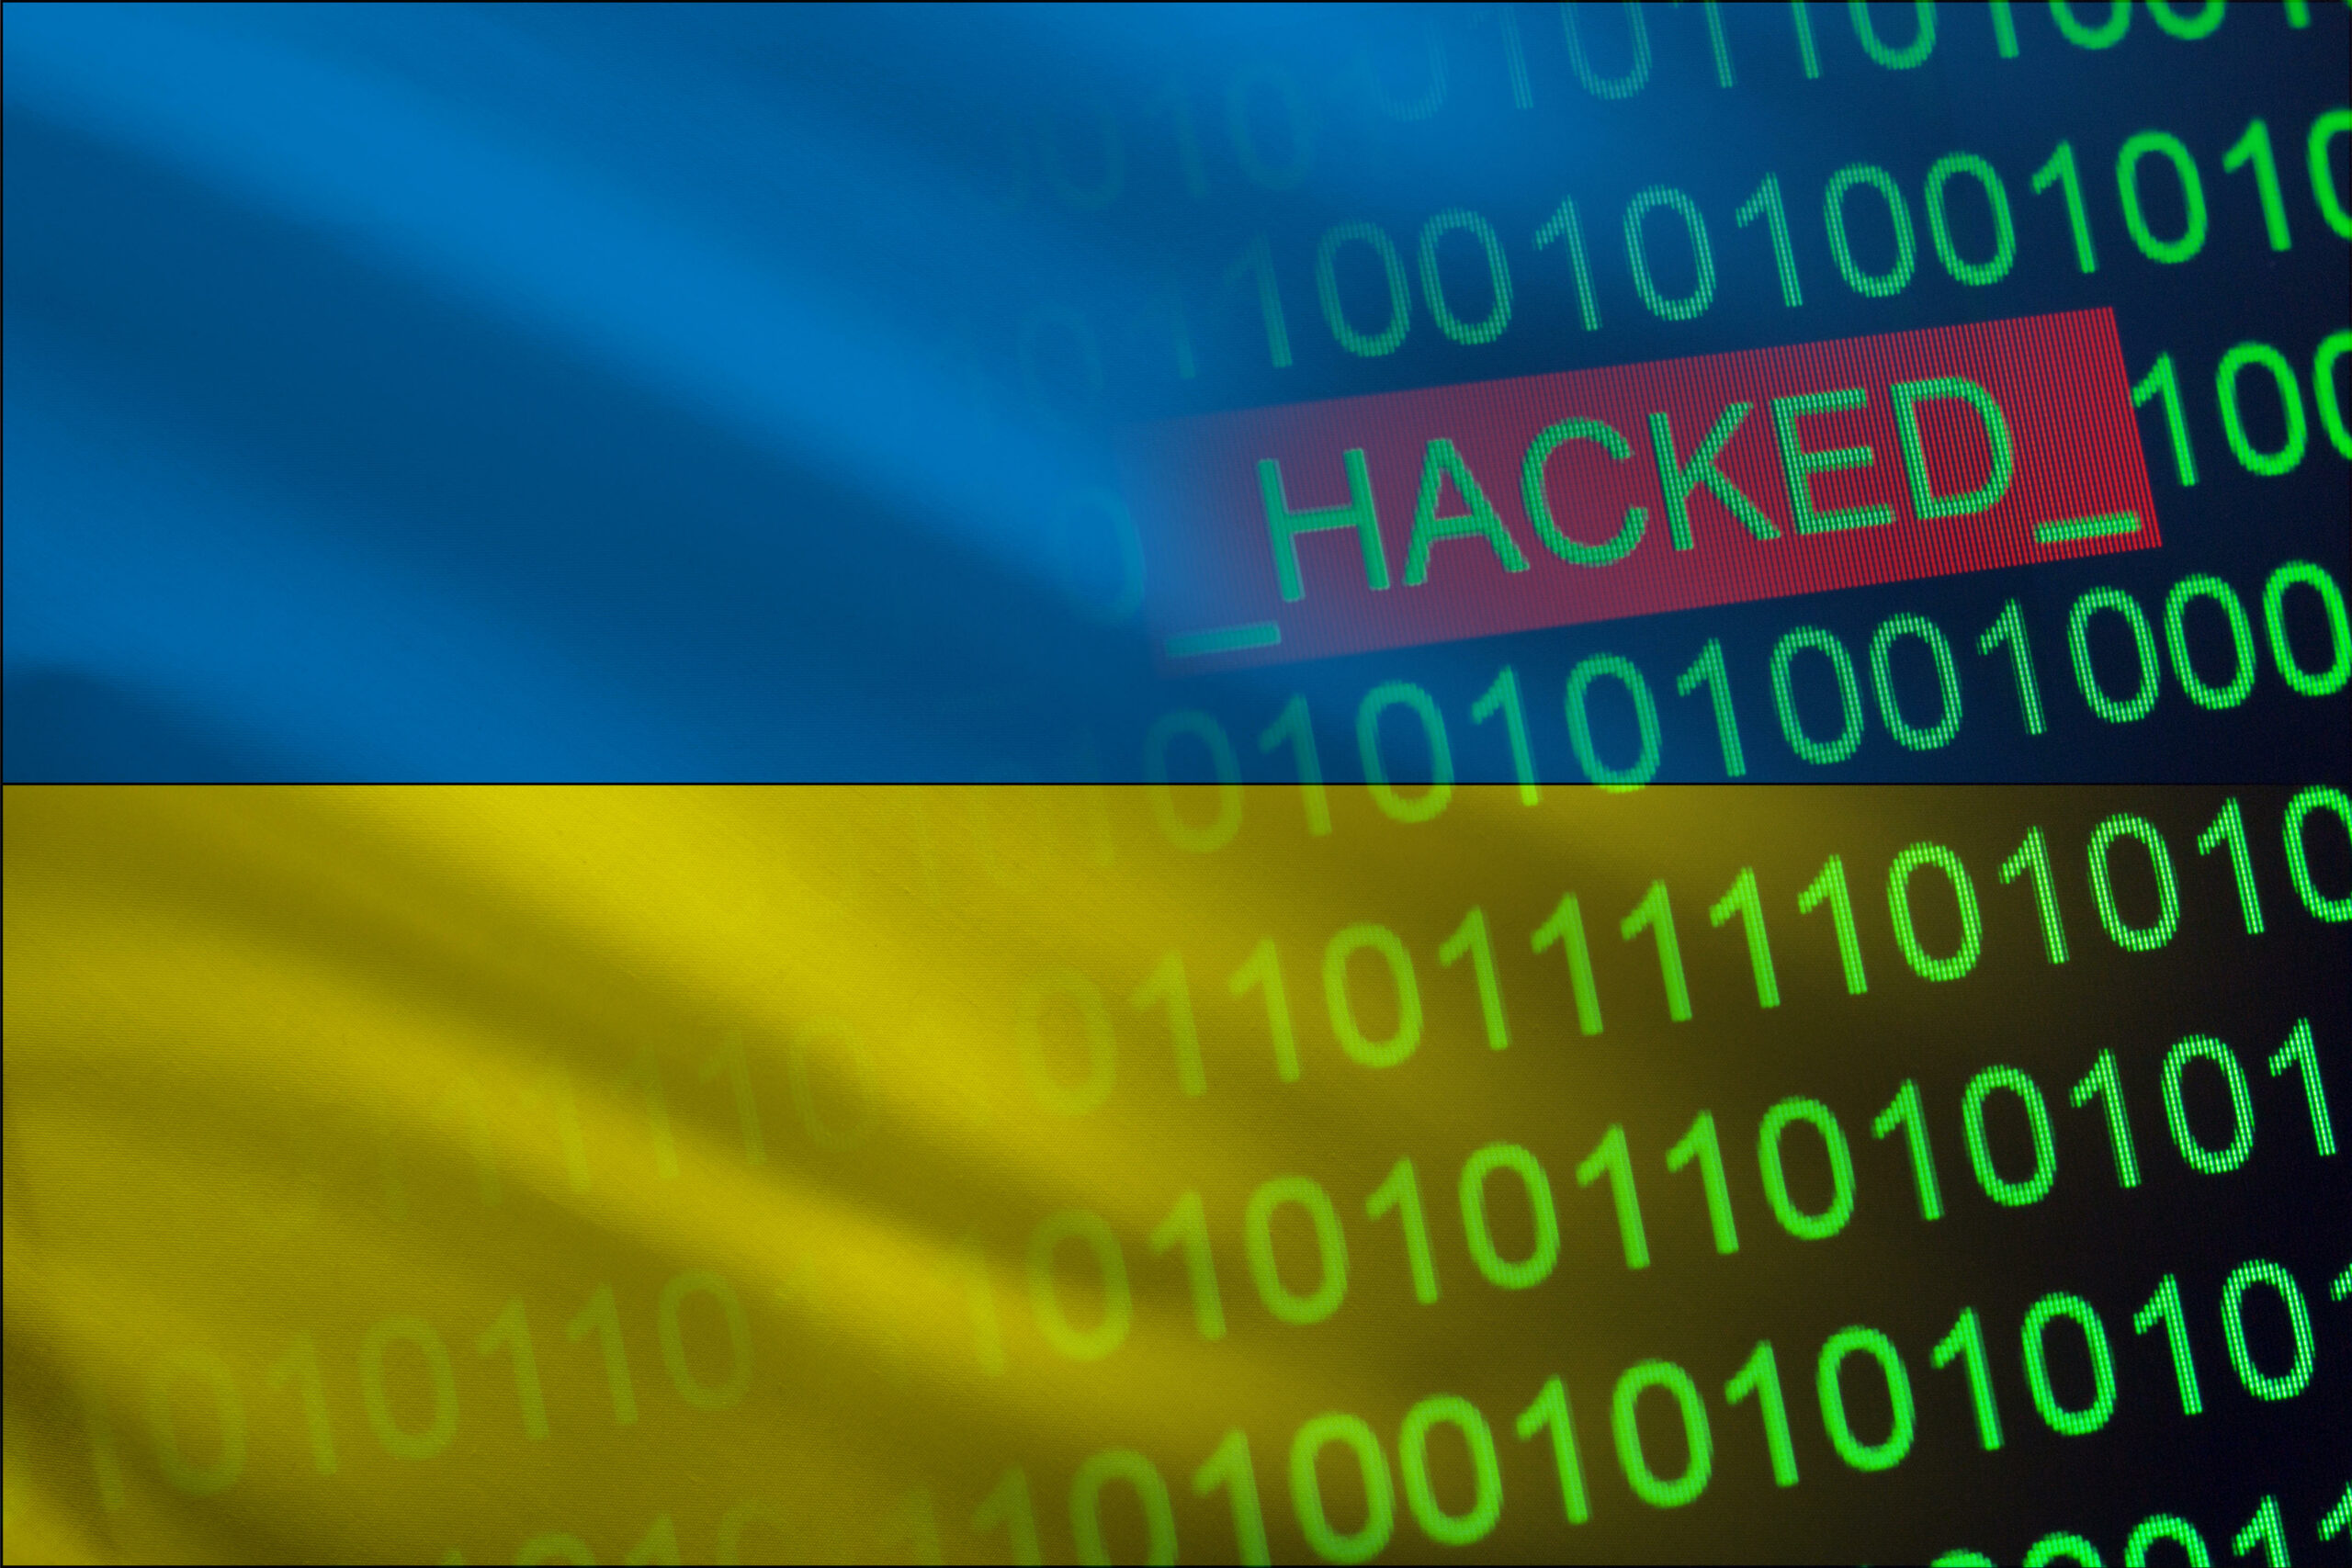 Empresa de agua rusa hackeada en represalia por el ataque a Kyivstar